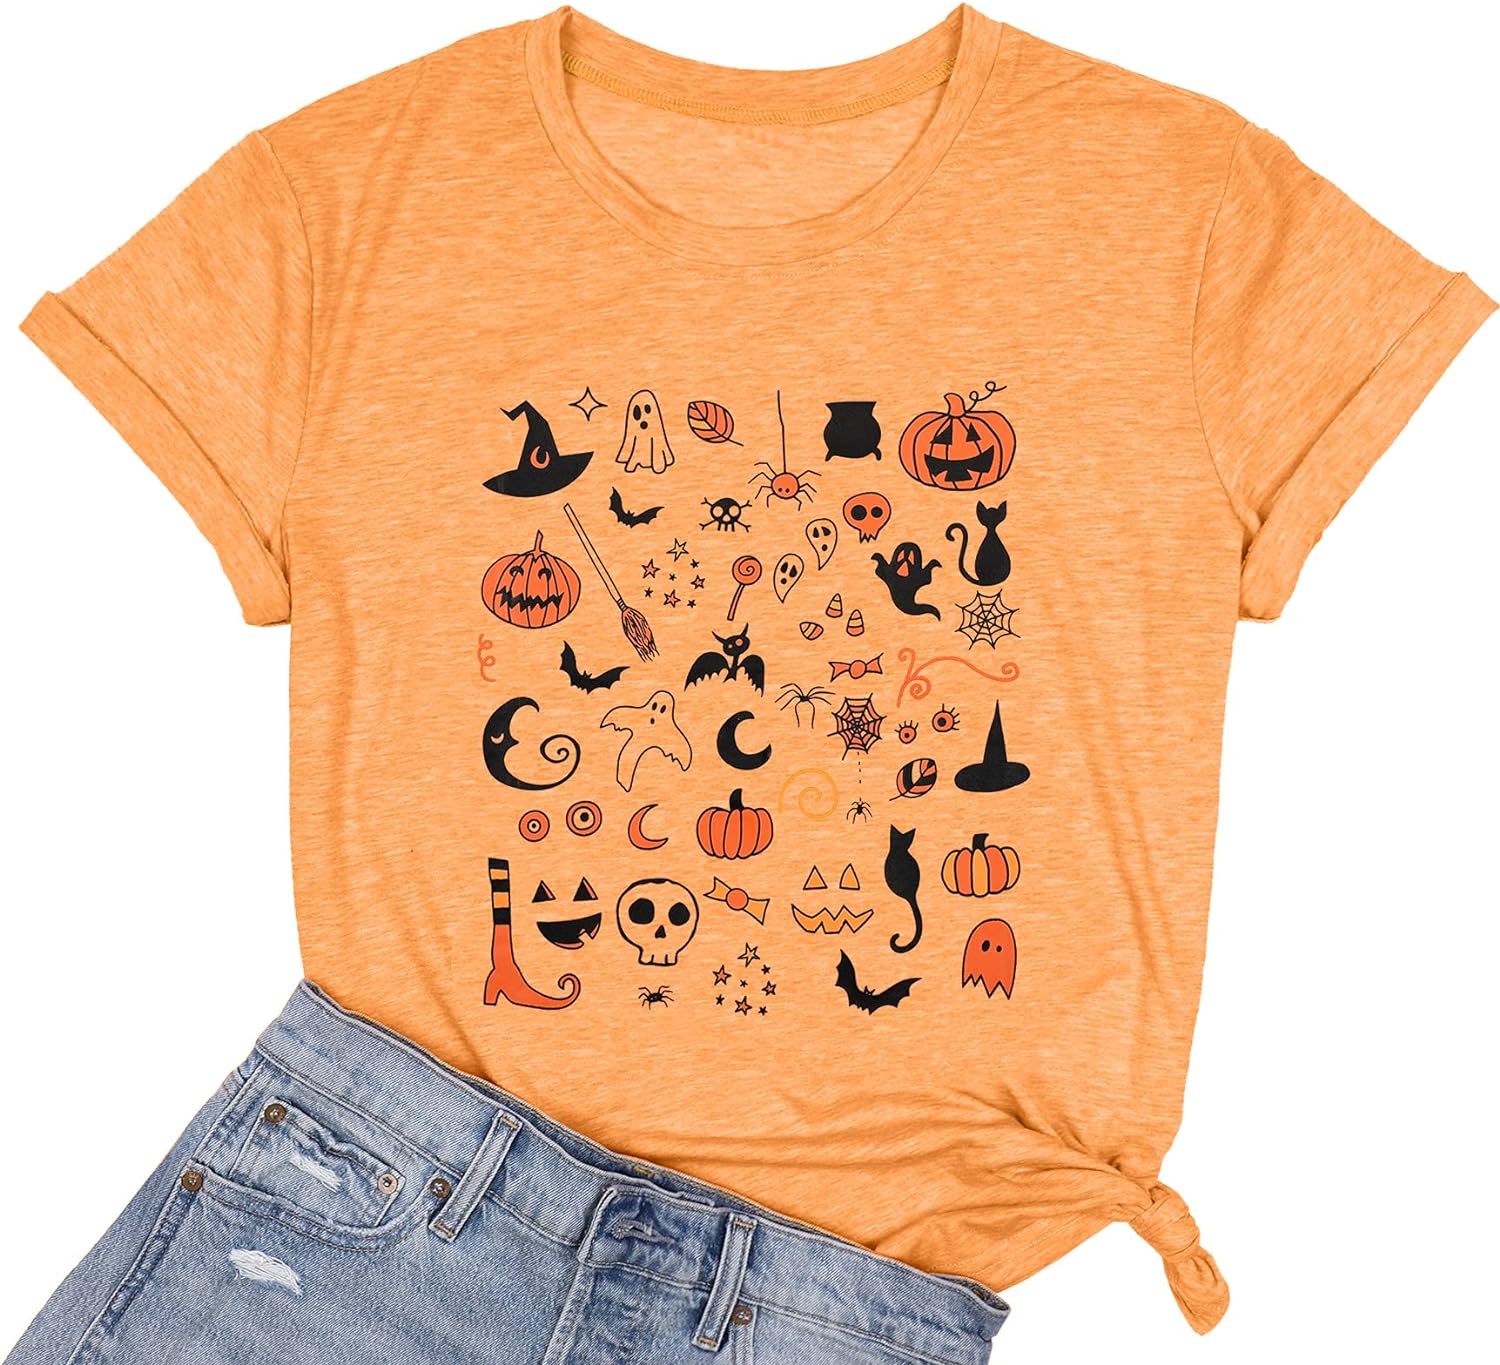 Halloween Shirts for Women Spooky Season Tee Shirt Halloween Doodles Graphic Short Sleeve Tees Tops